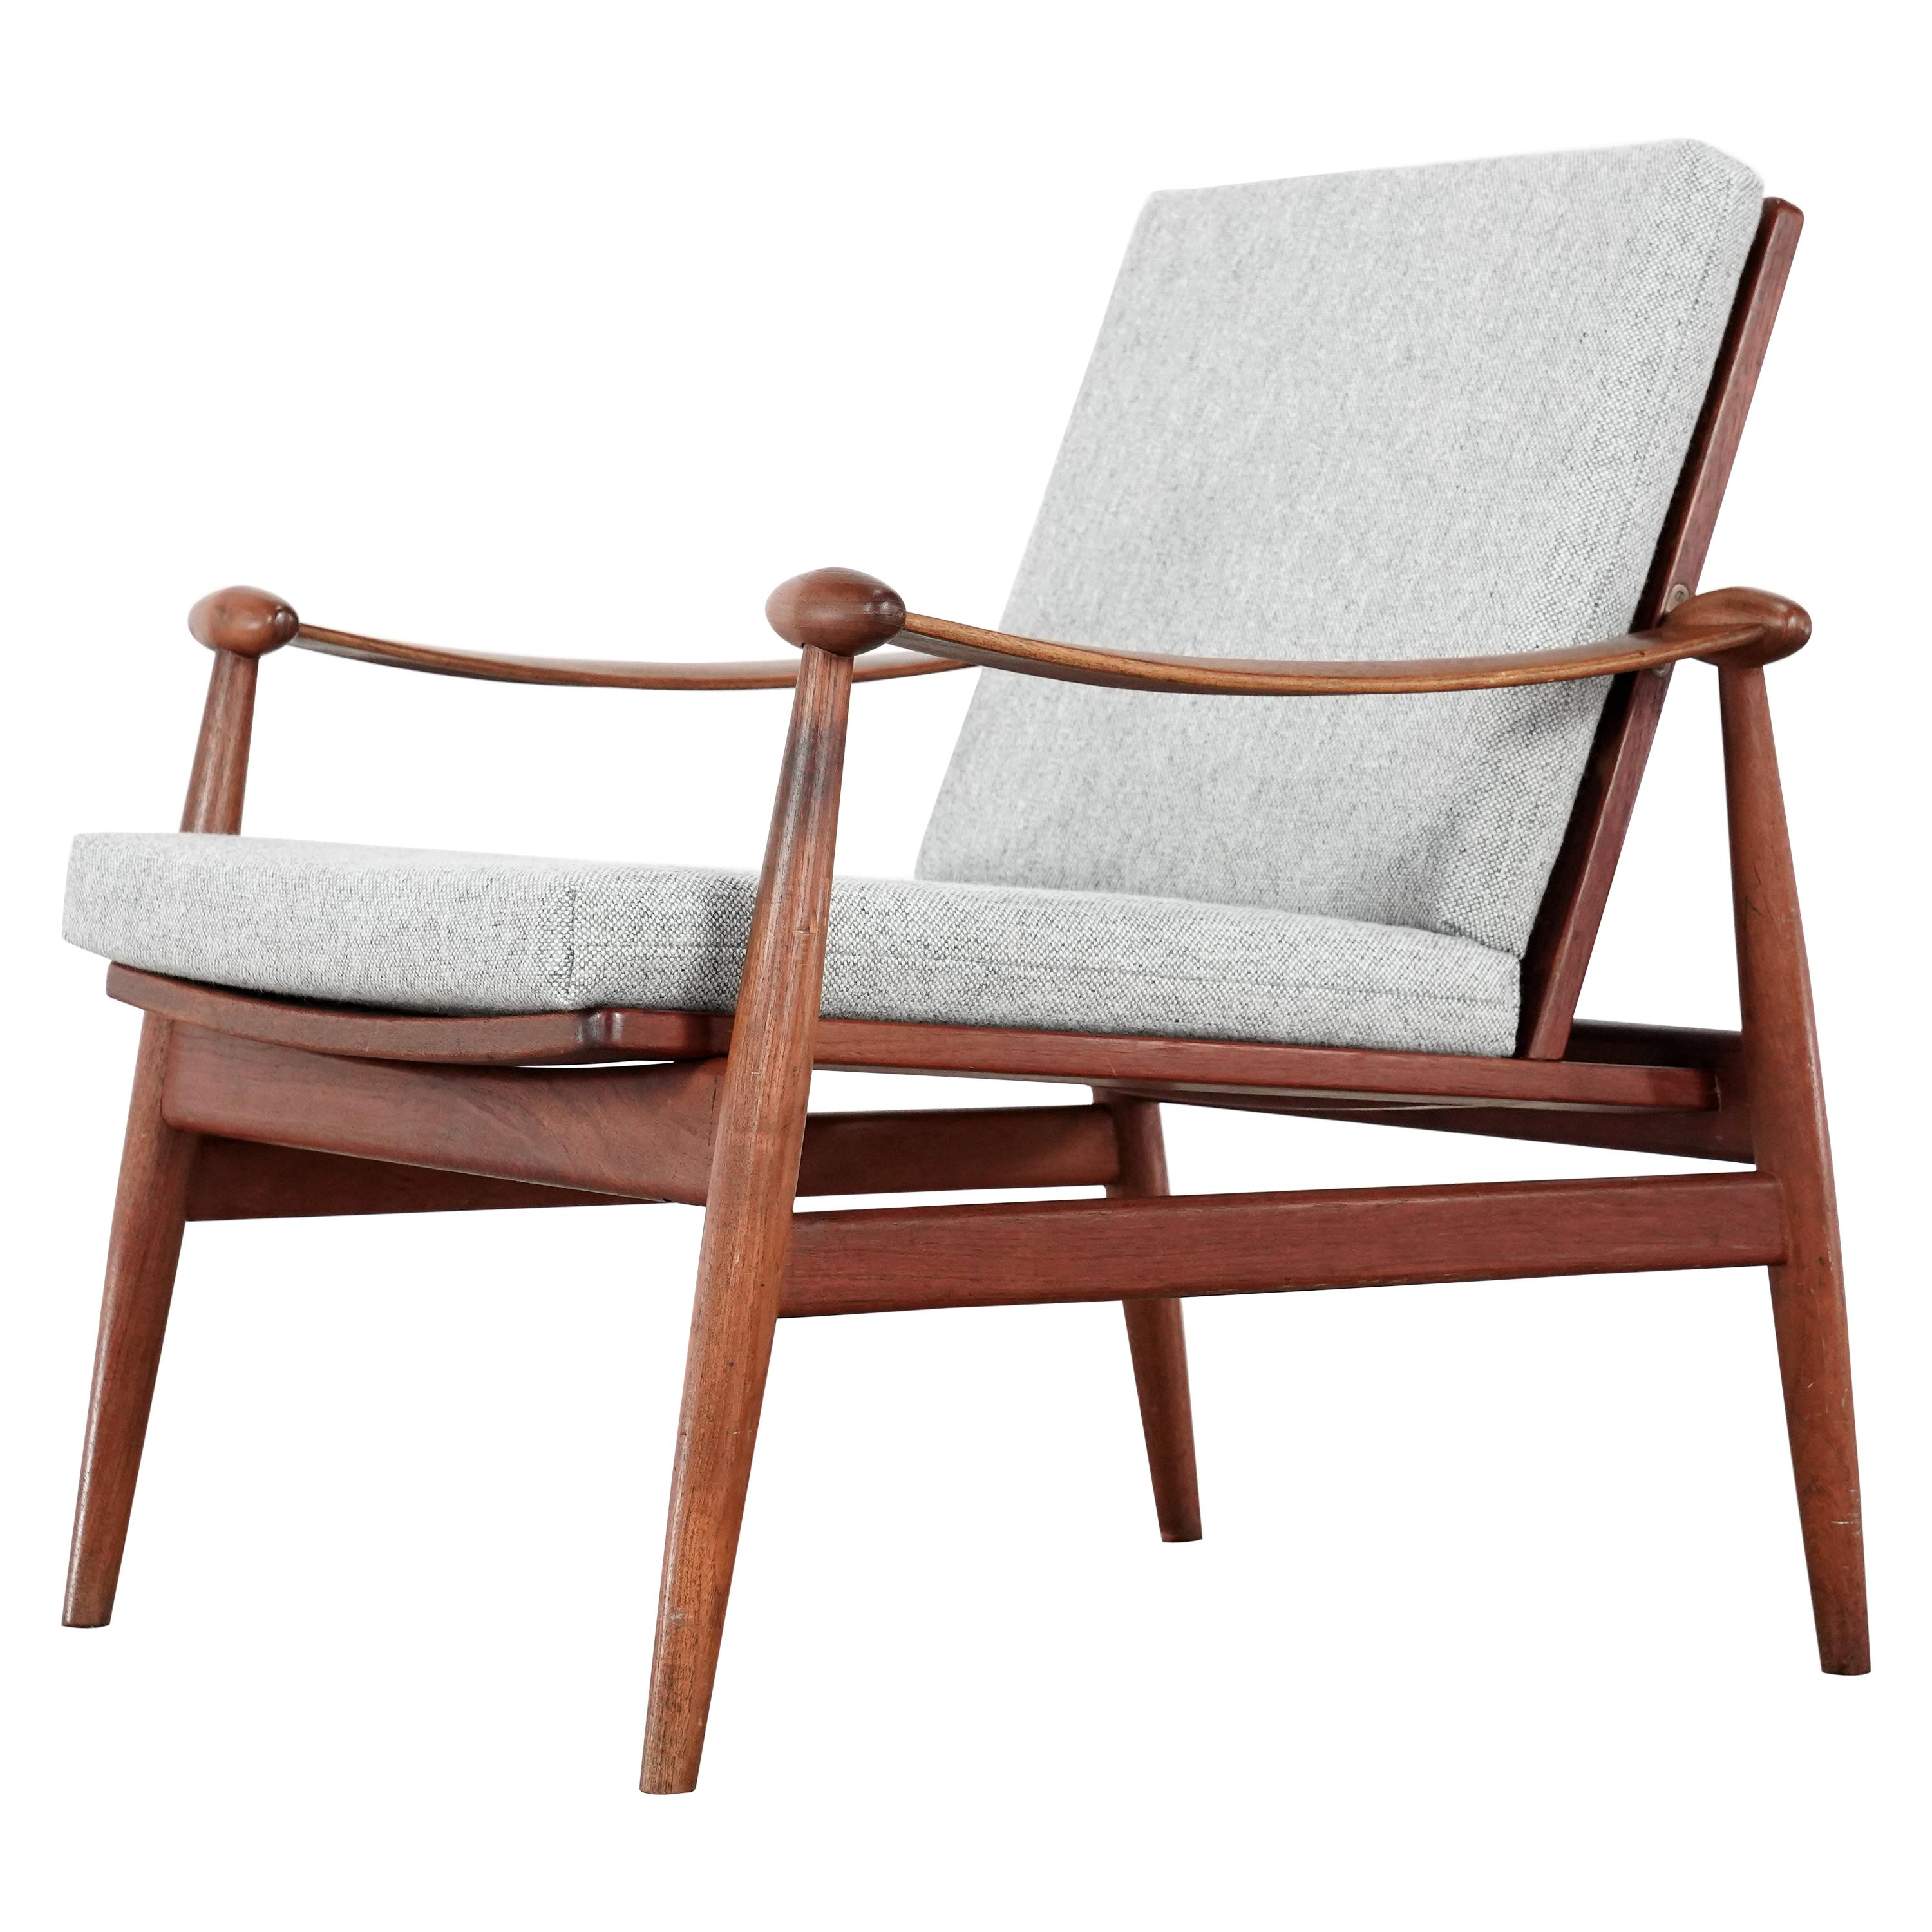 Finn Juhl, Spade Teak Lounge Chair, 1953 by France & Daverkosen, Denmark